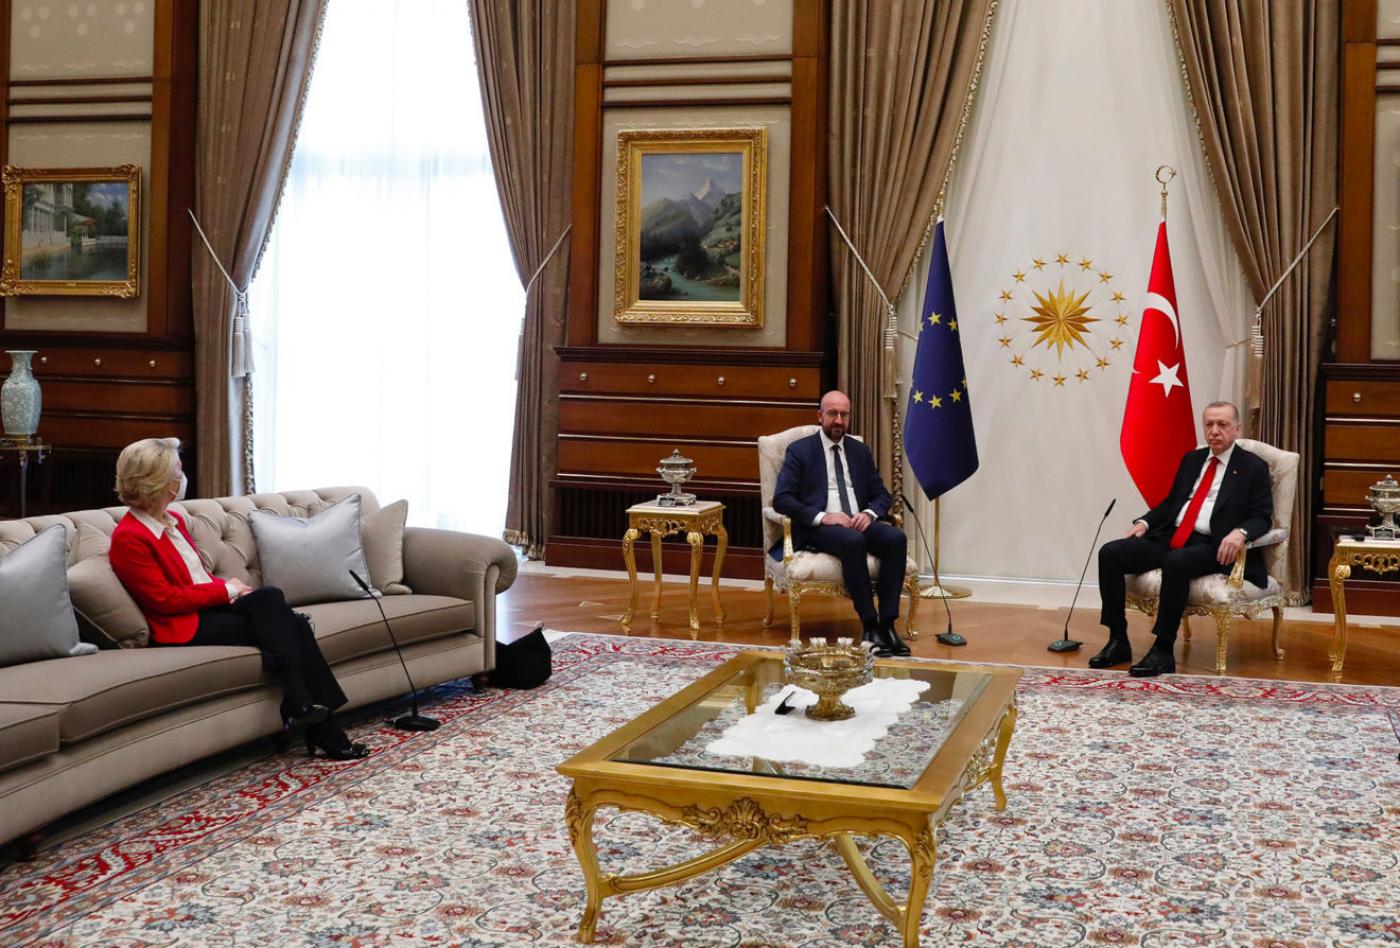 EU responsible for 'sofagate,' says Turkey's foreign minister